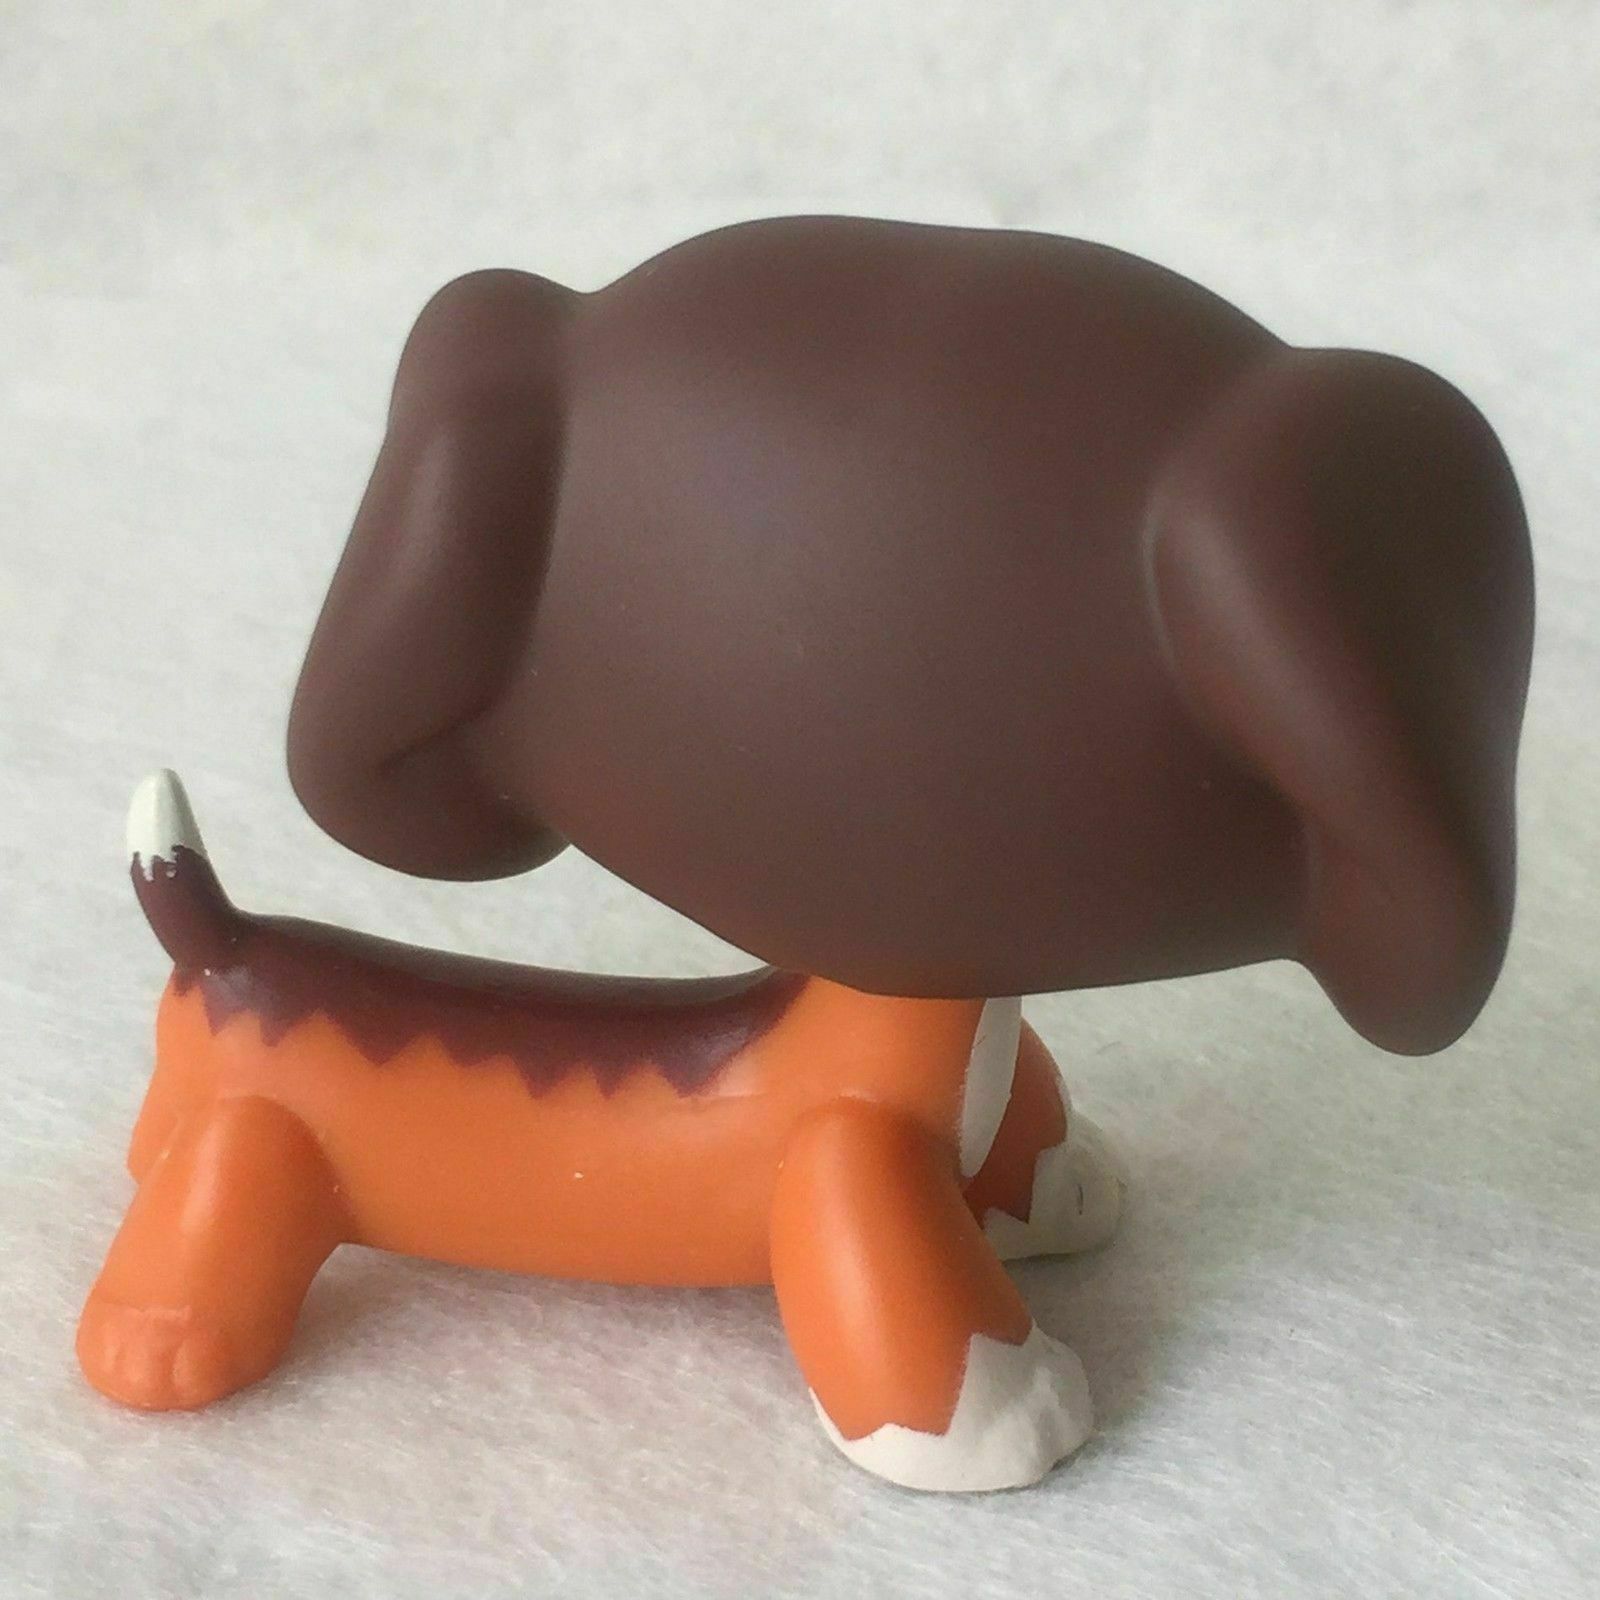 Littlest Pet Shop Animaux Collection Lps Jouet #675 Savannah Savvy Teckel Dog S